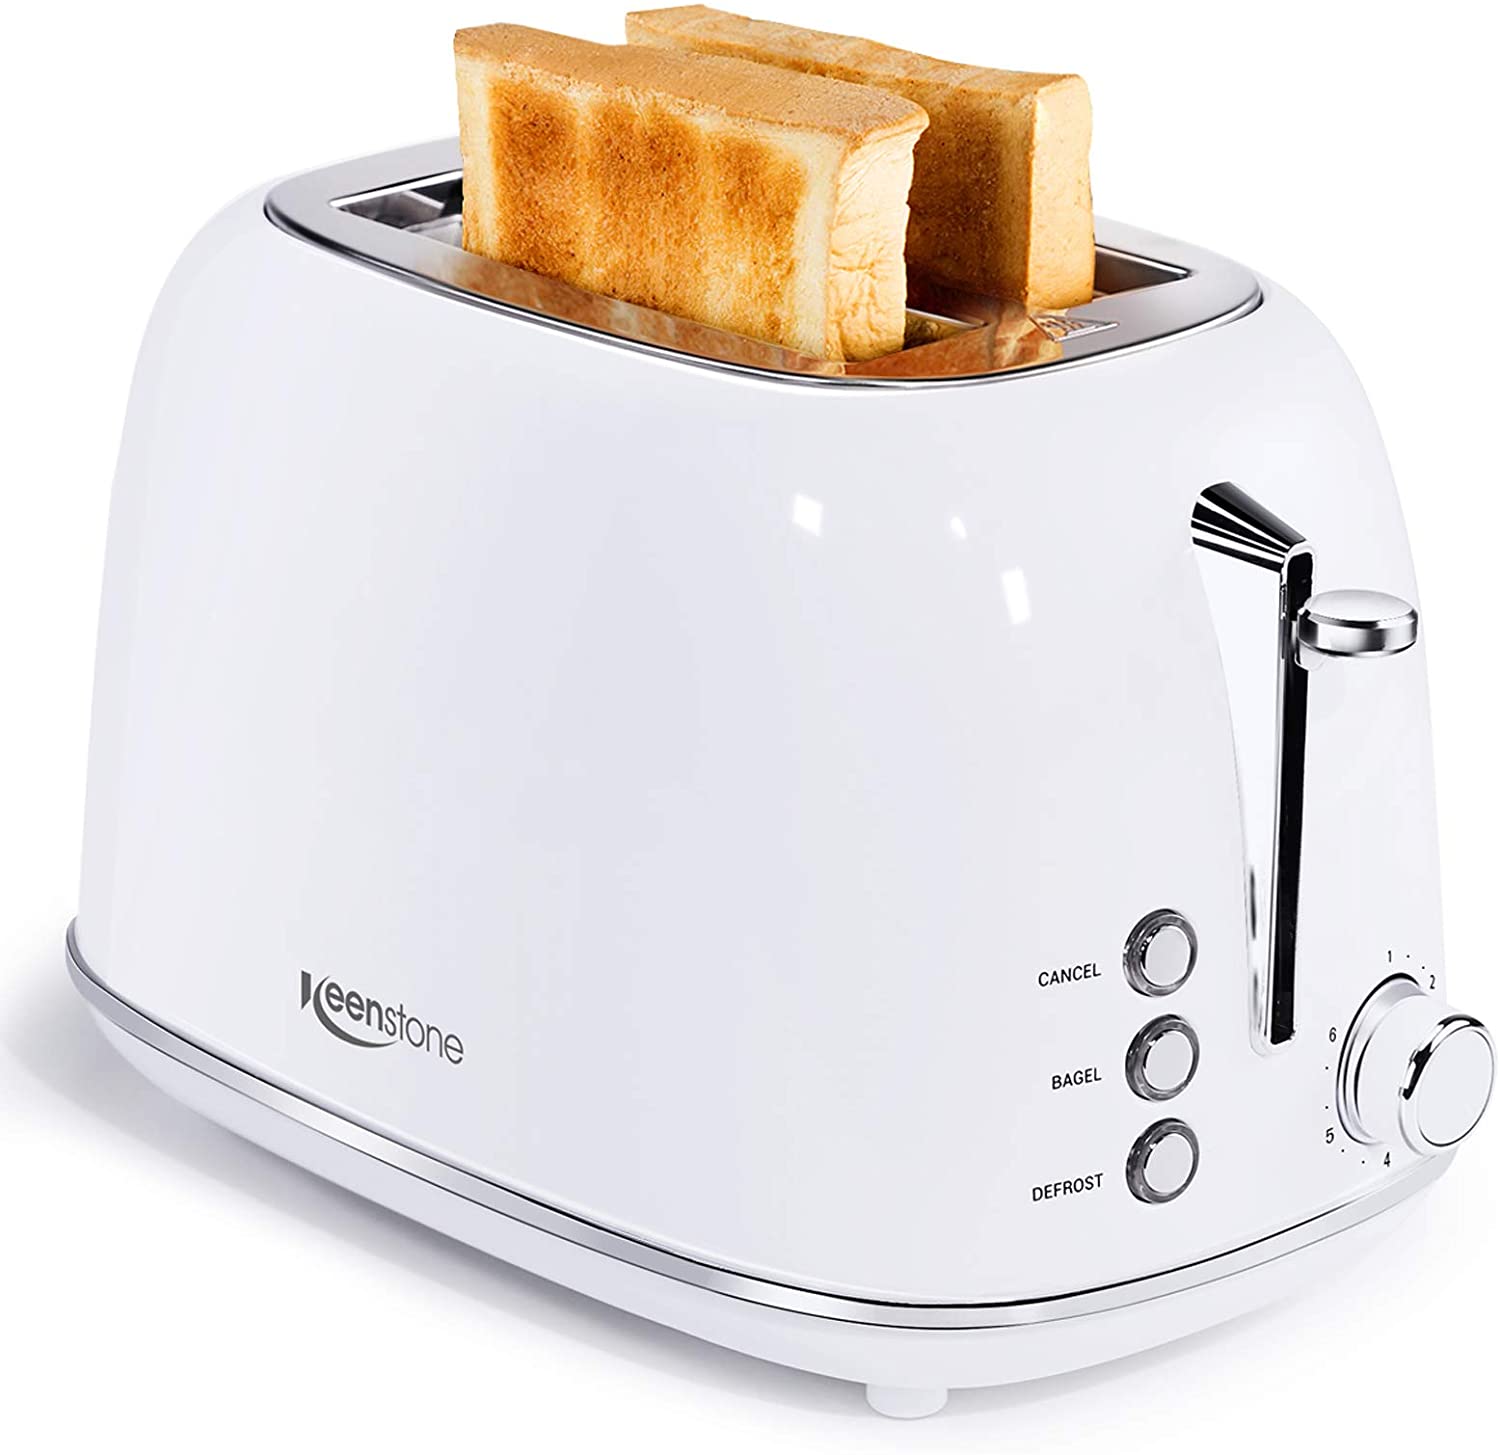 Toaster 2 Slice stainless steel